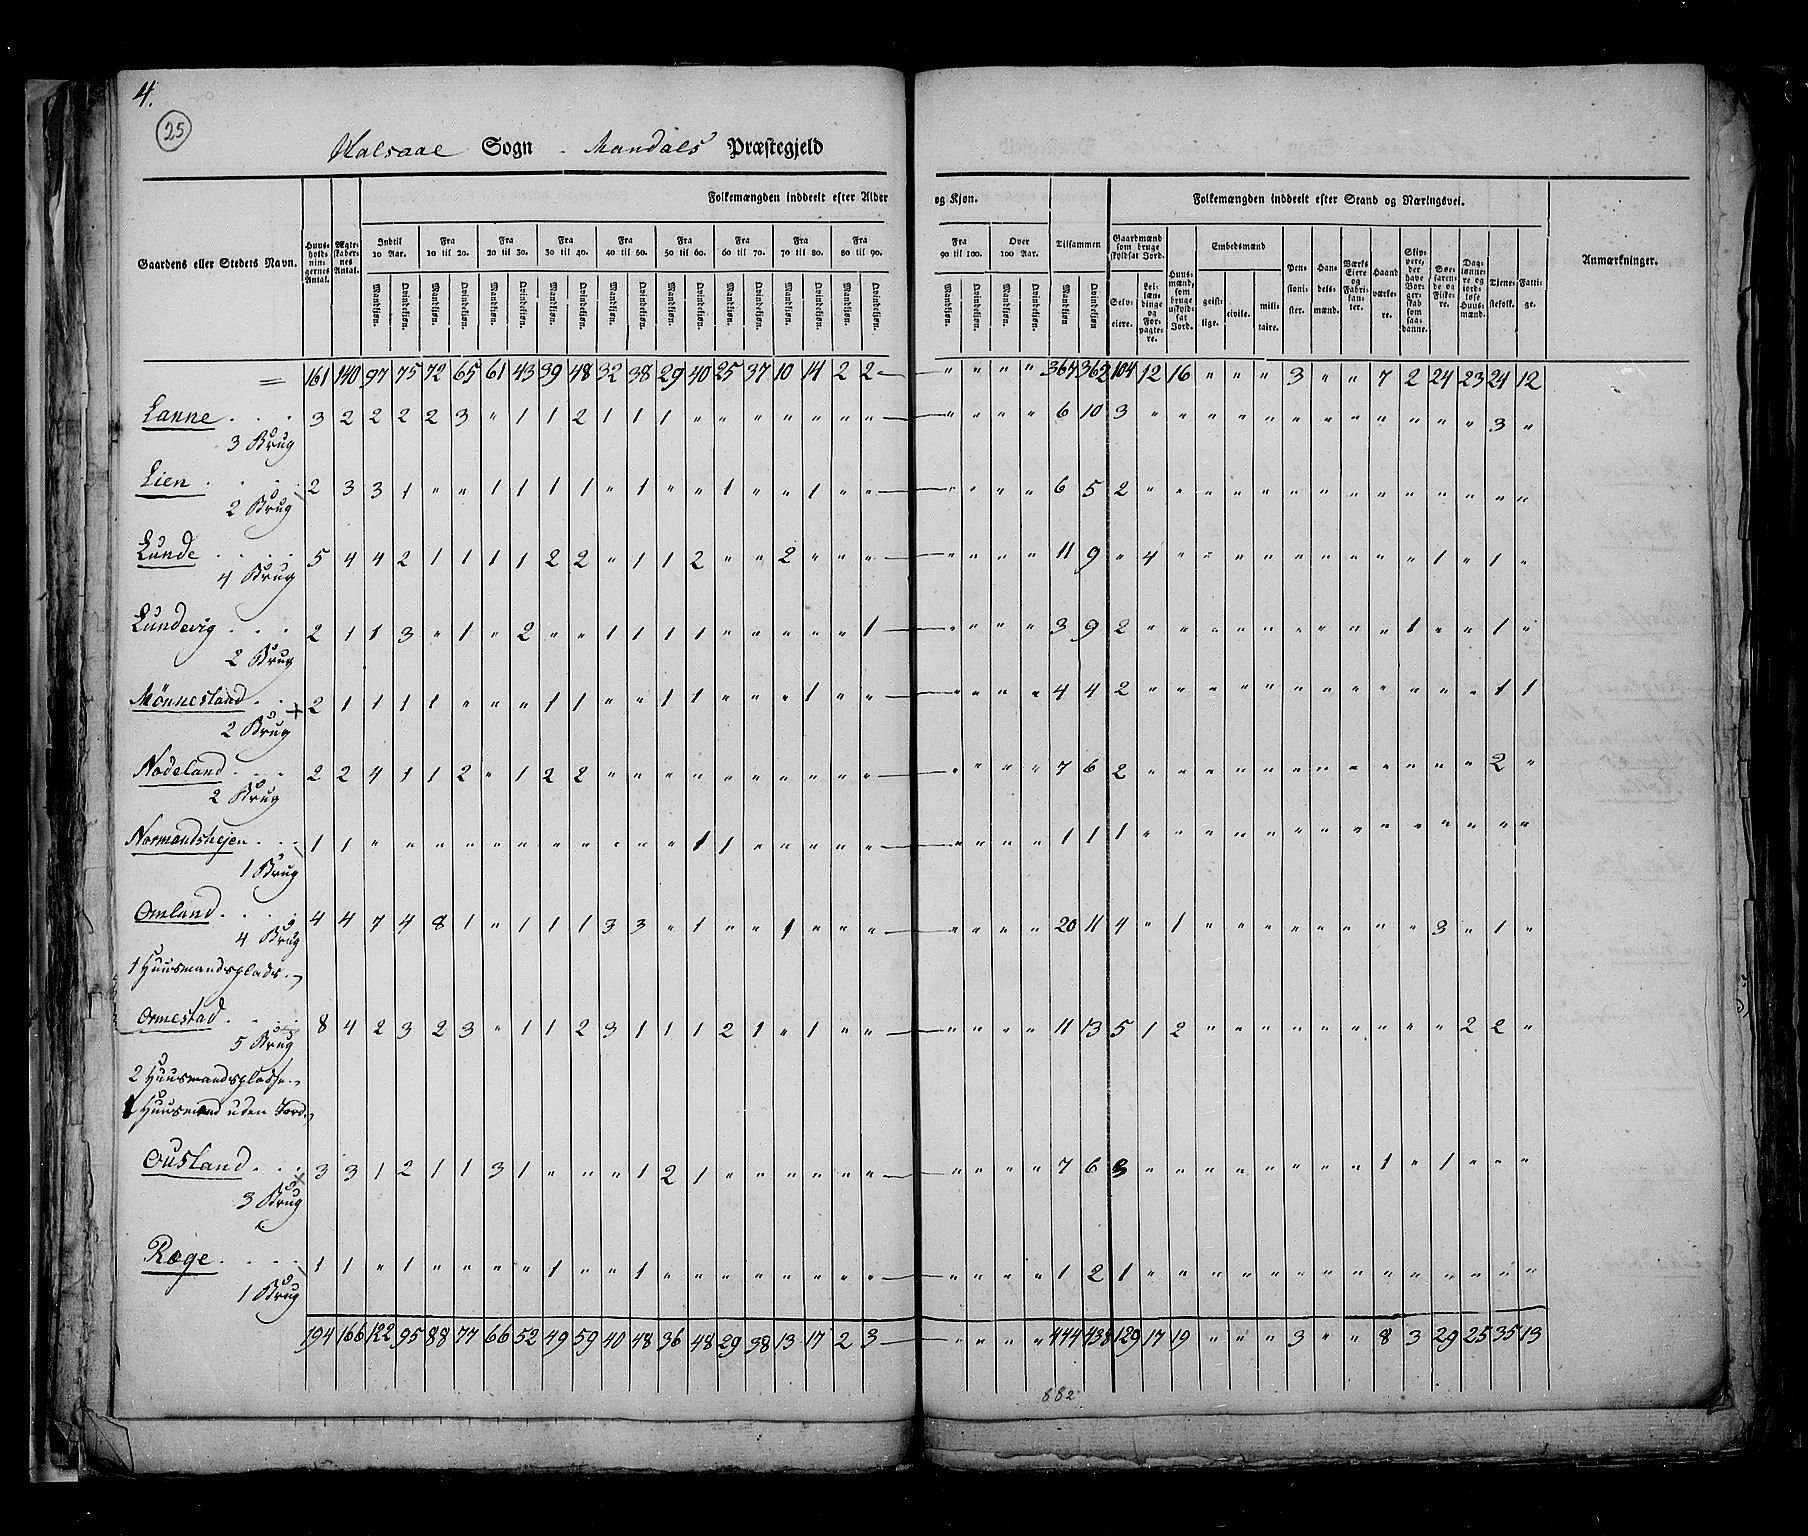 RA, Census 1825, vol. 11: Lister og Mandal amt, 1825, p. 25